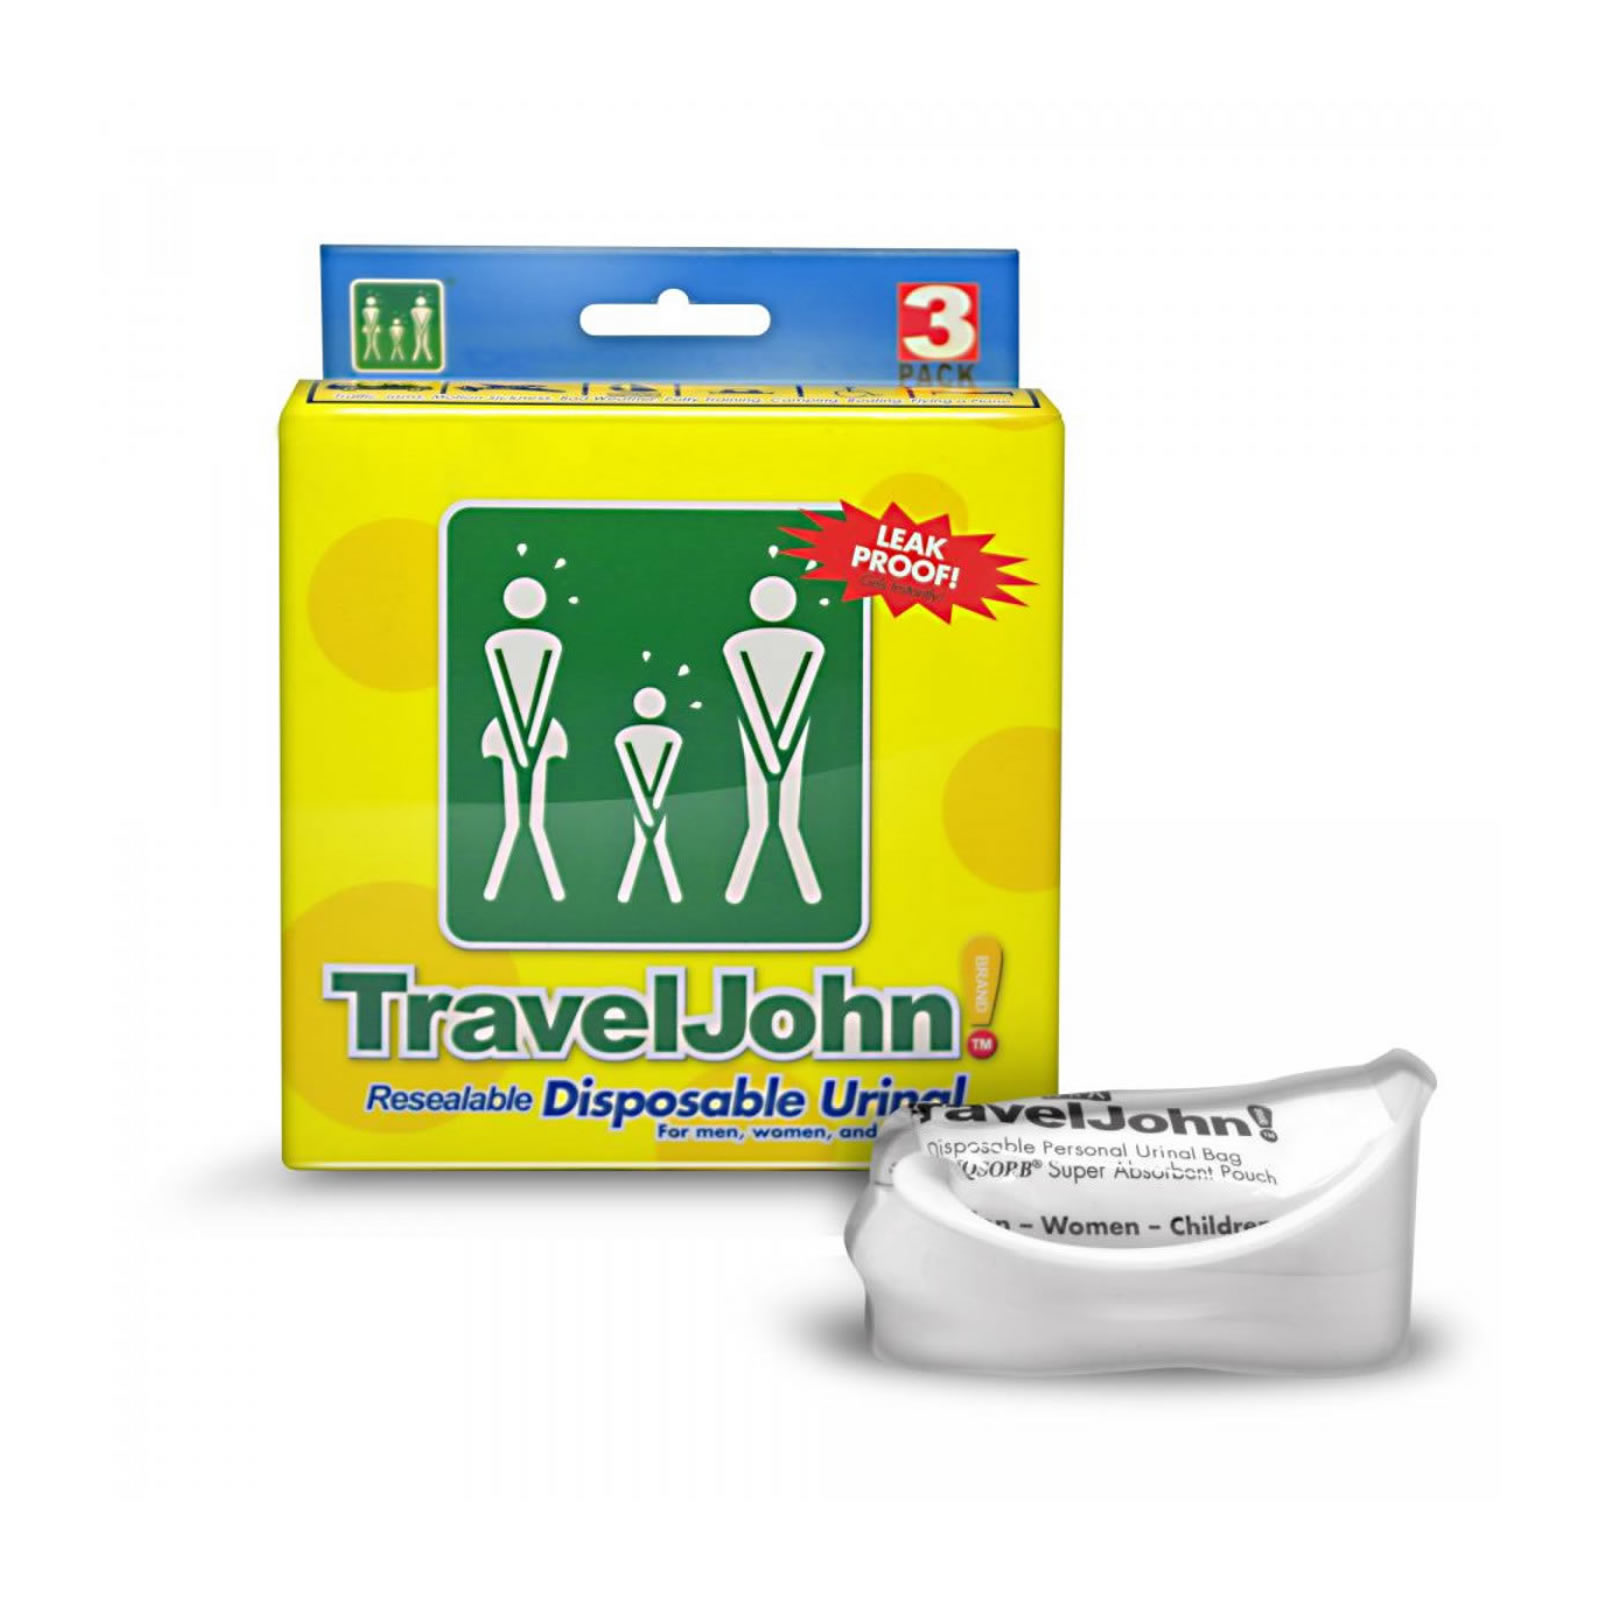 TravelJohn Travel John Disposable Solid Waste Bags Emergency Toilet Unisex 3 Pk 